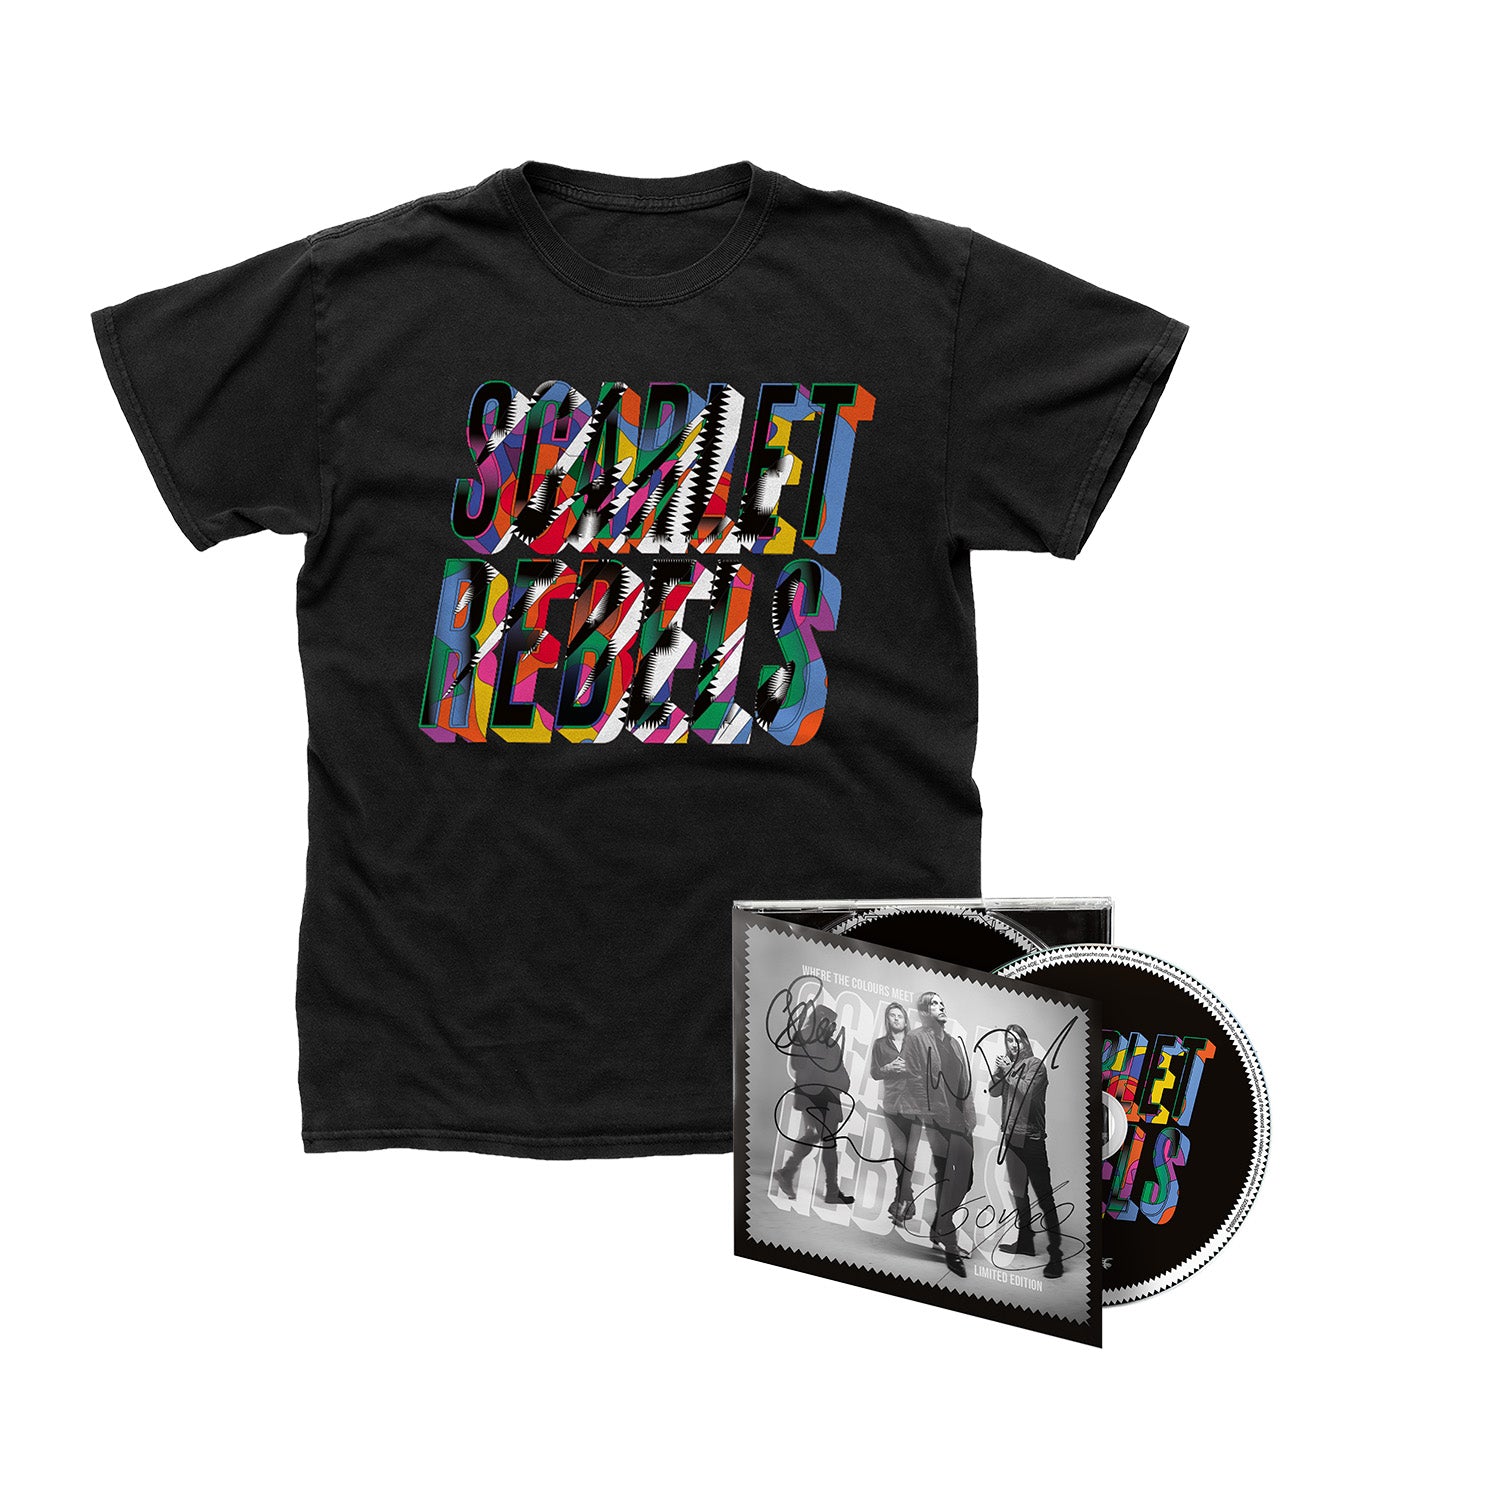 Scarlet Rebels "Where The Colours Meet" SIGNED Digipak CD w/ Bonus Tracks, Download & Short or Long Sleeve T shirt - PRE-ORDER